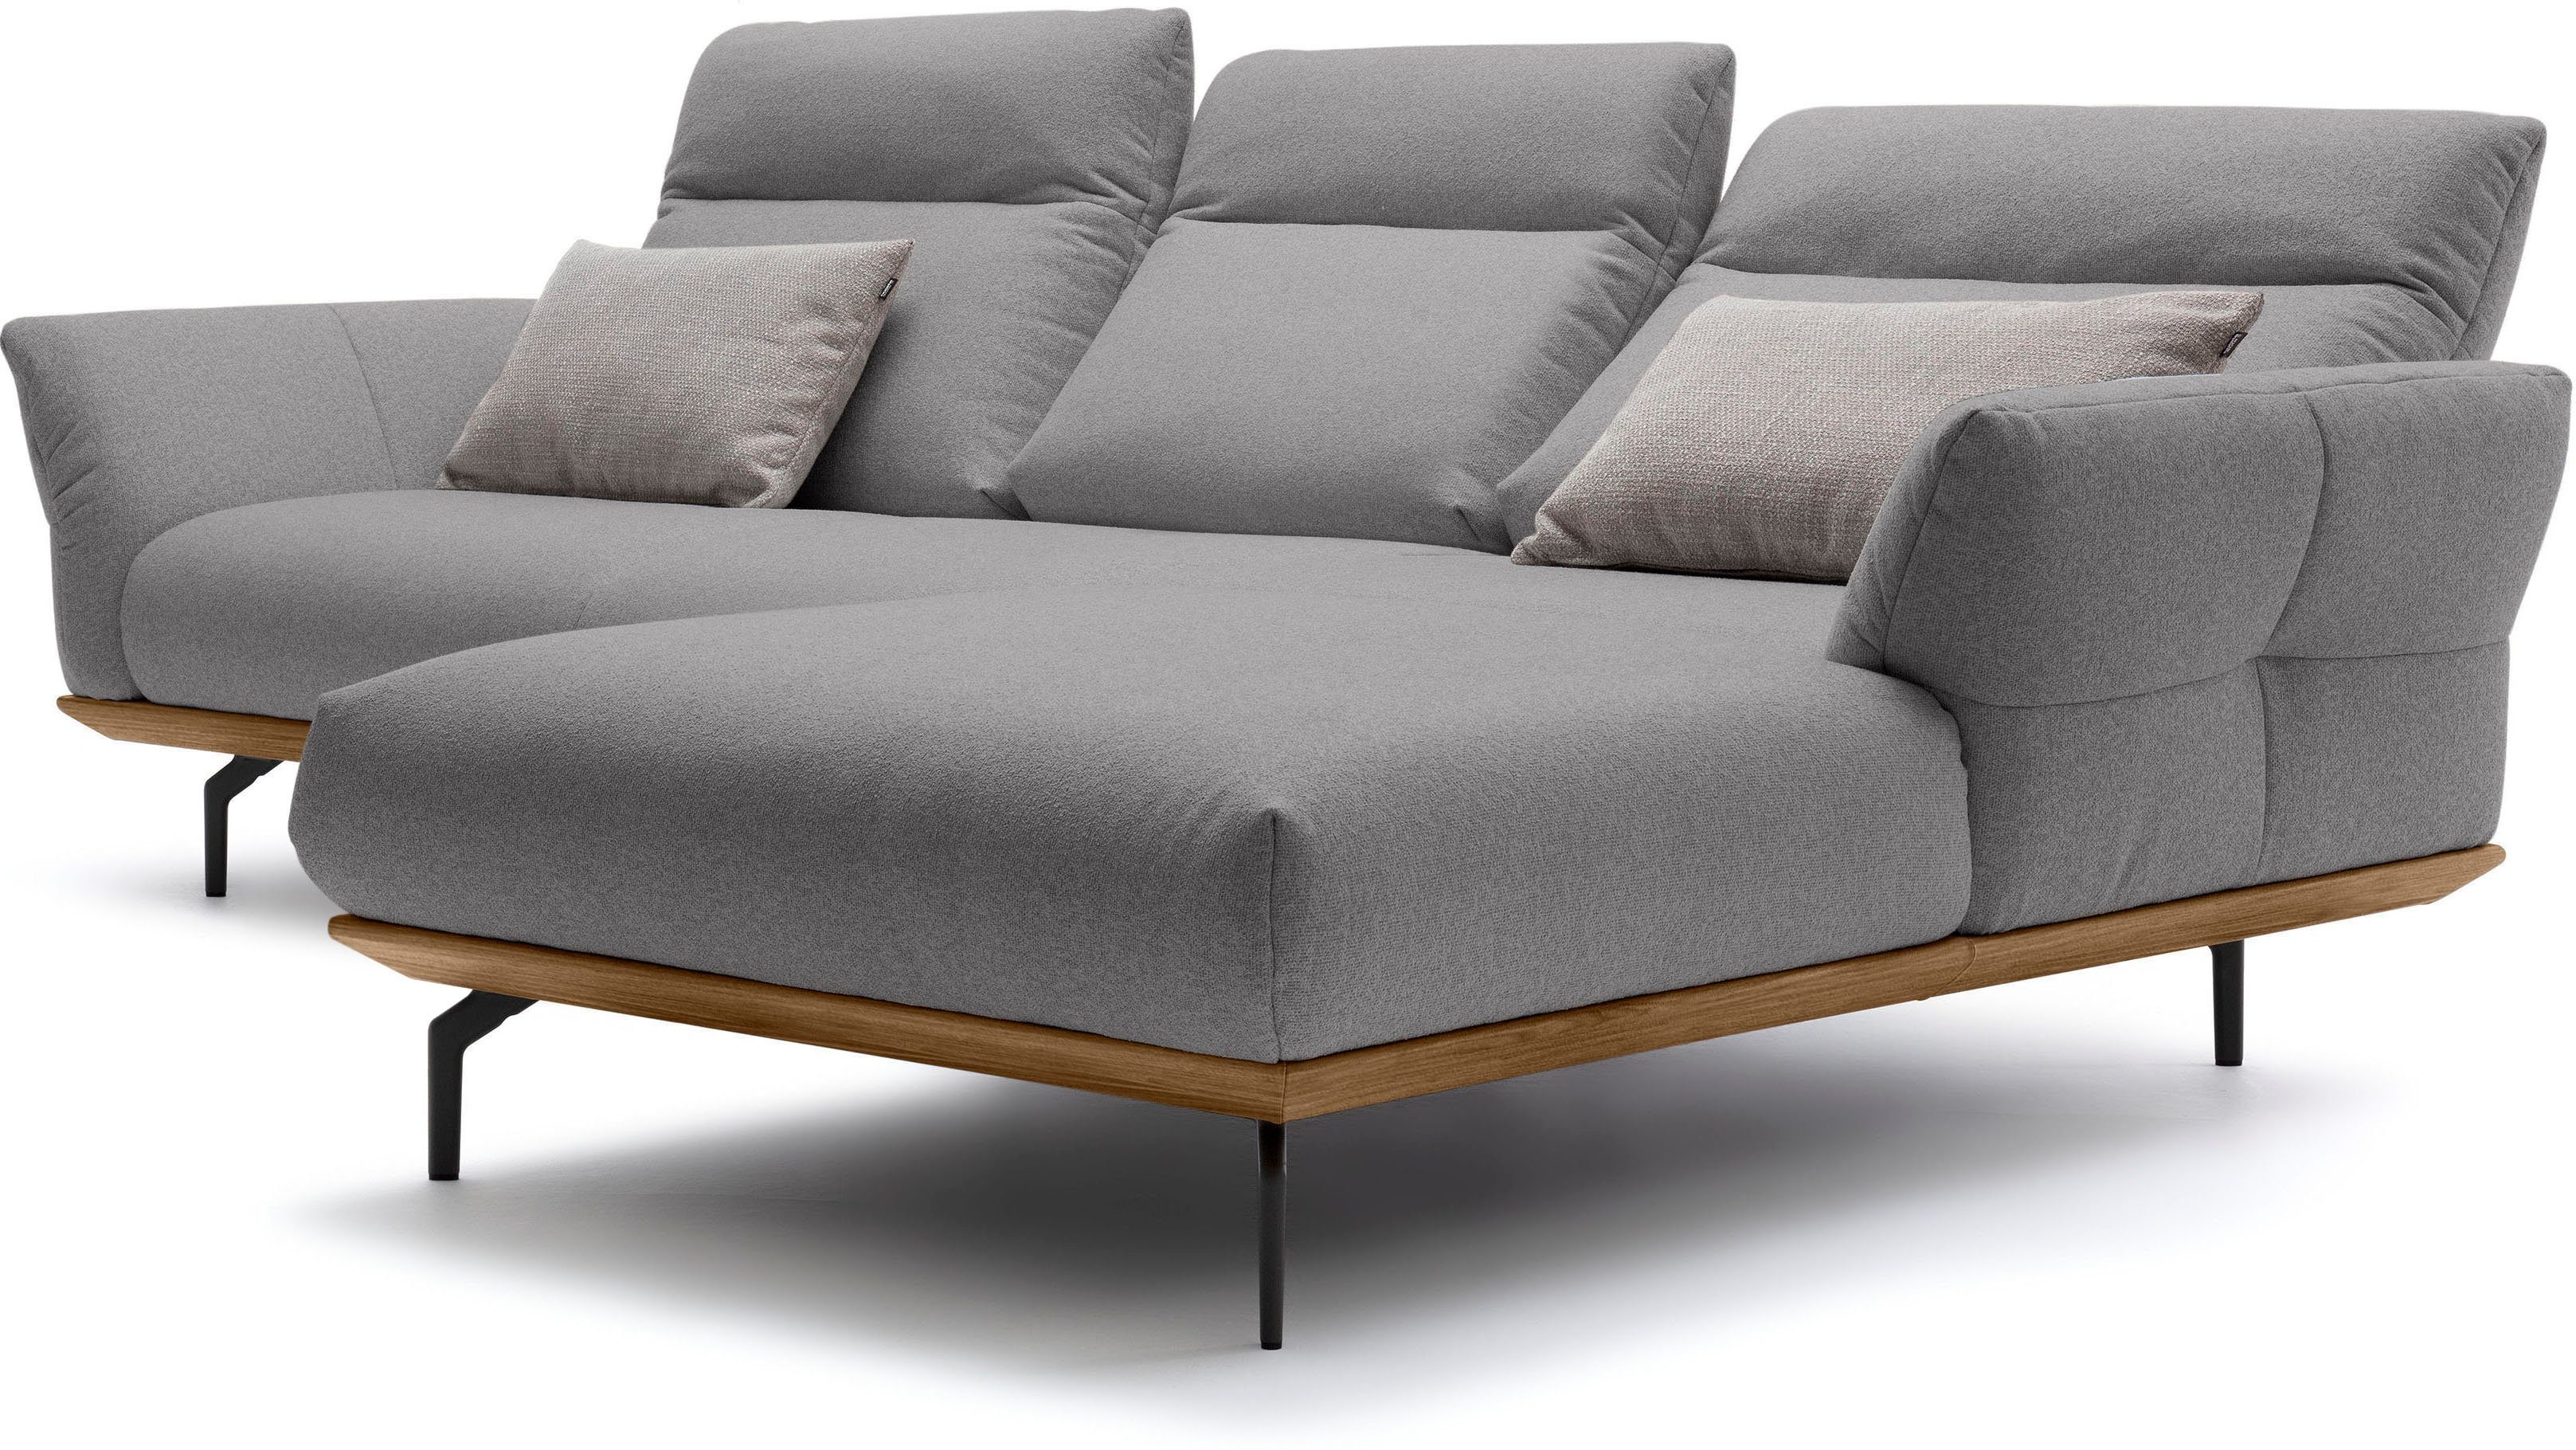 sofa Breite in in Winkelfüße hülsta Ecksofa Nussbaum, cm 298 Sockel hs.460, Umbragrau,